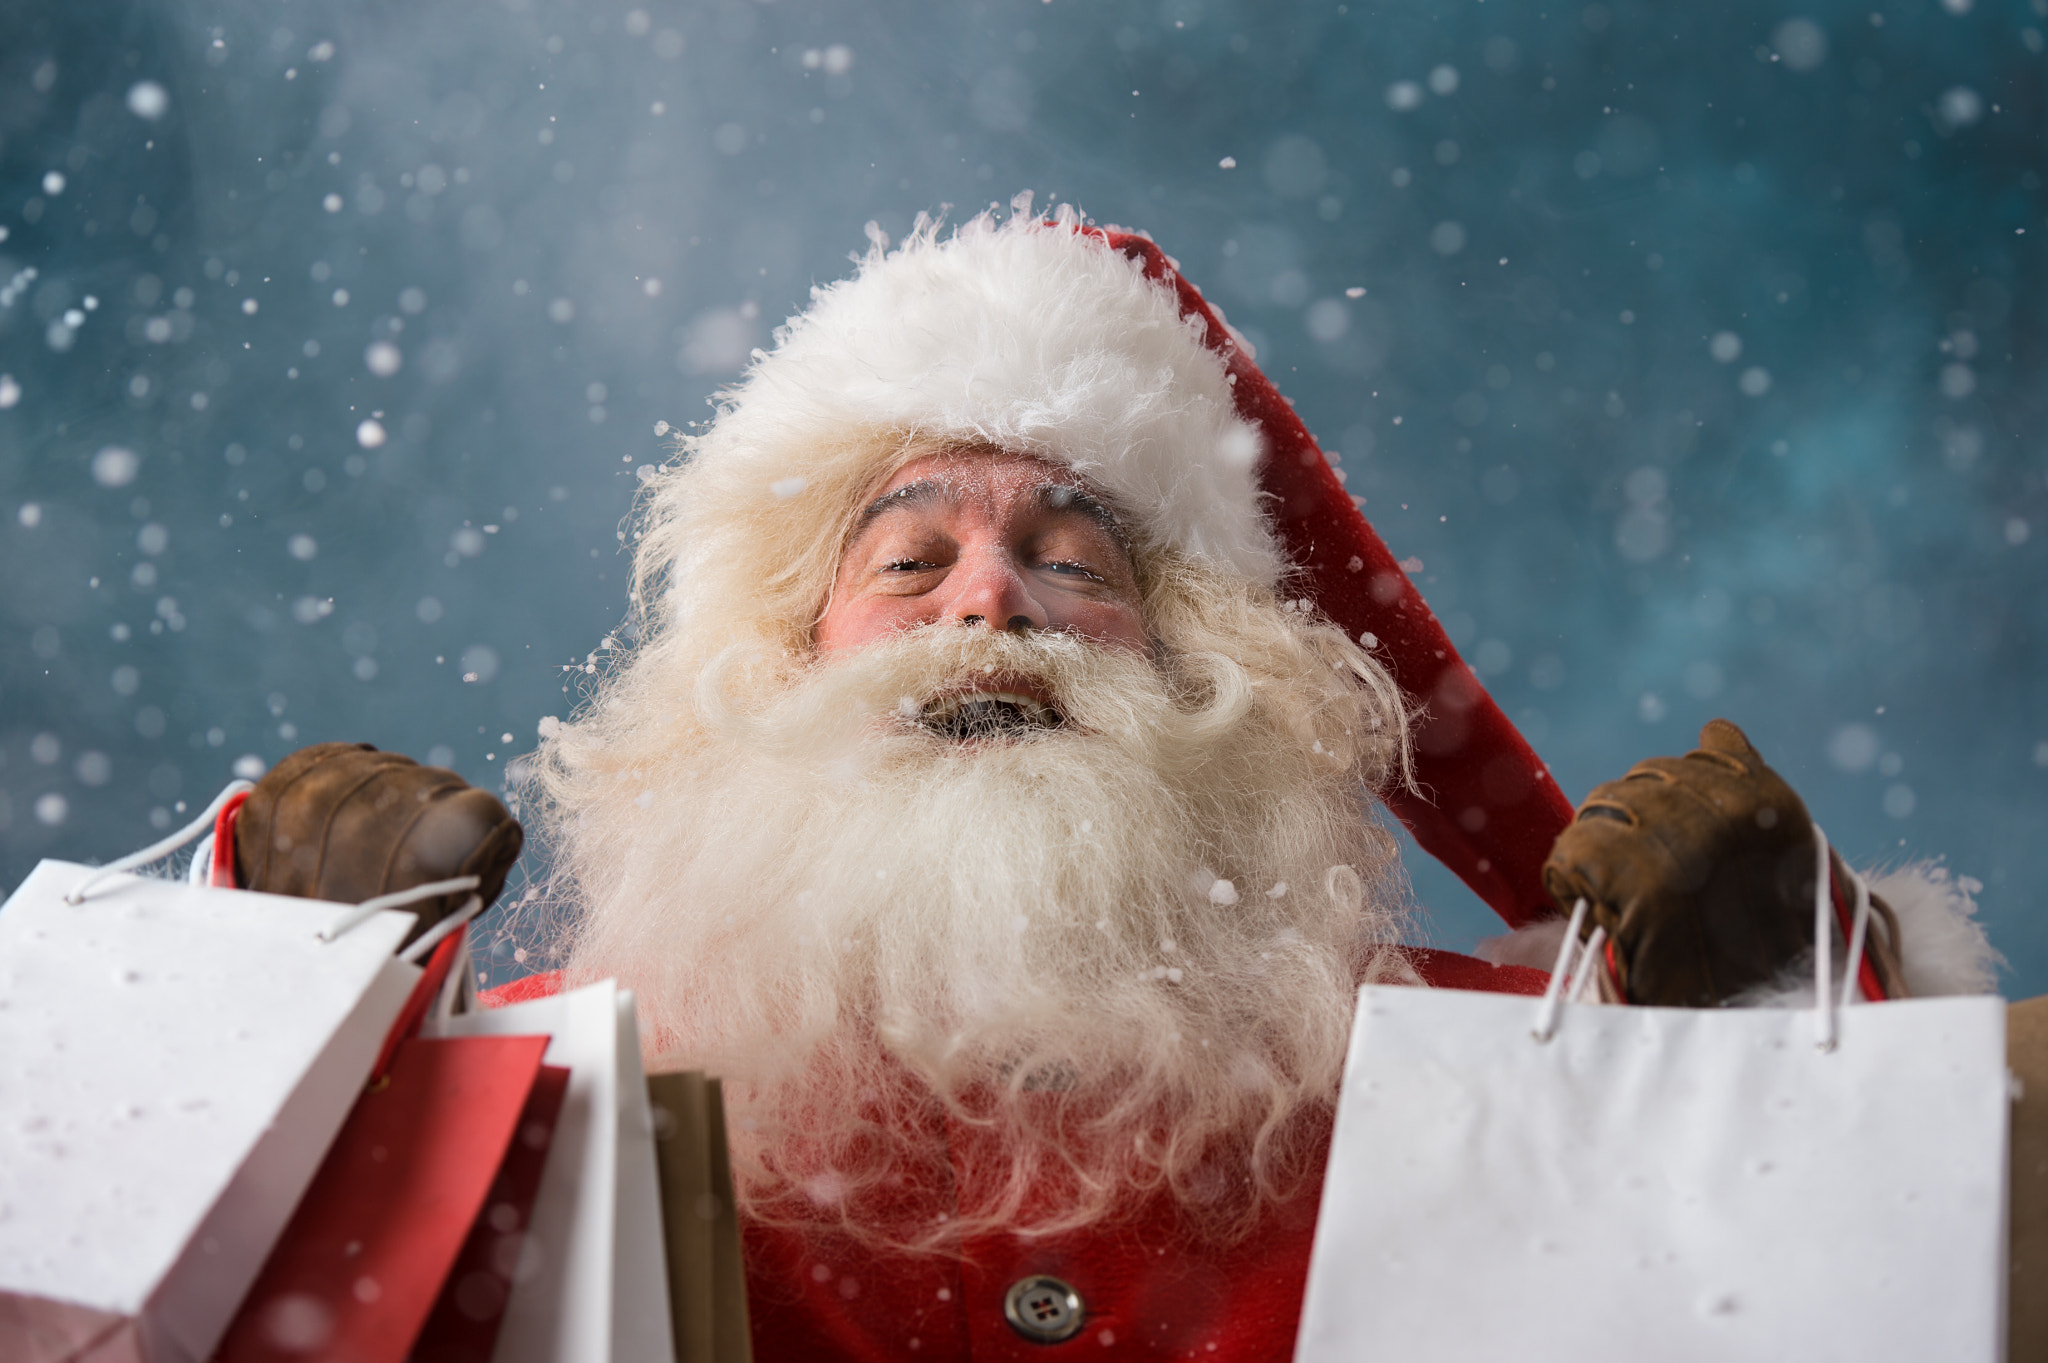 Santa Claus outdoors in snowfall holding shopping bags